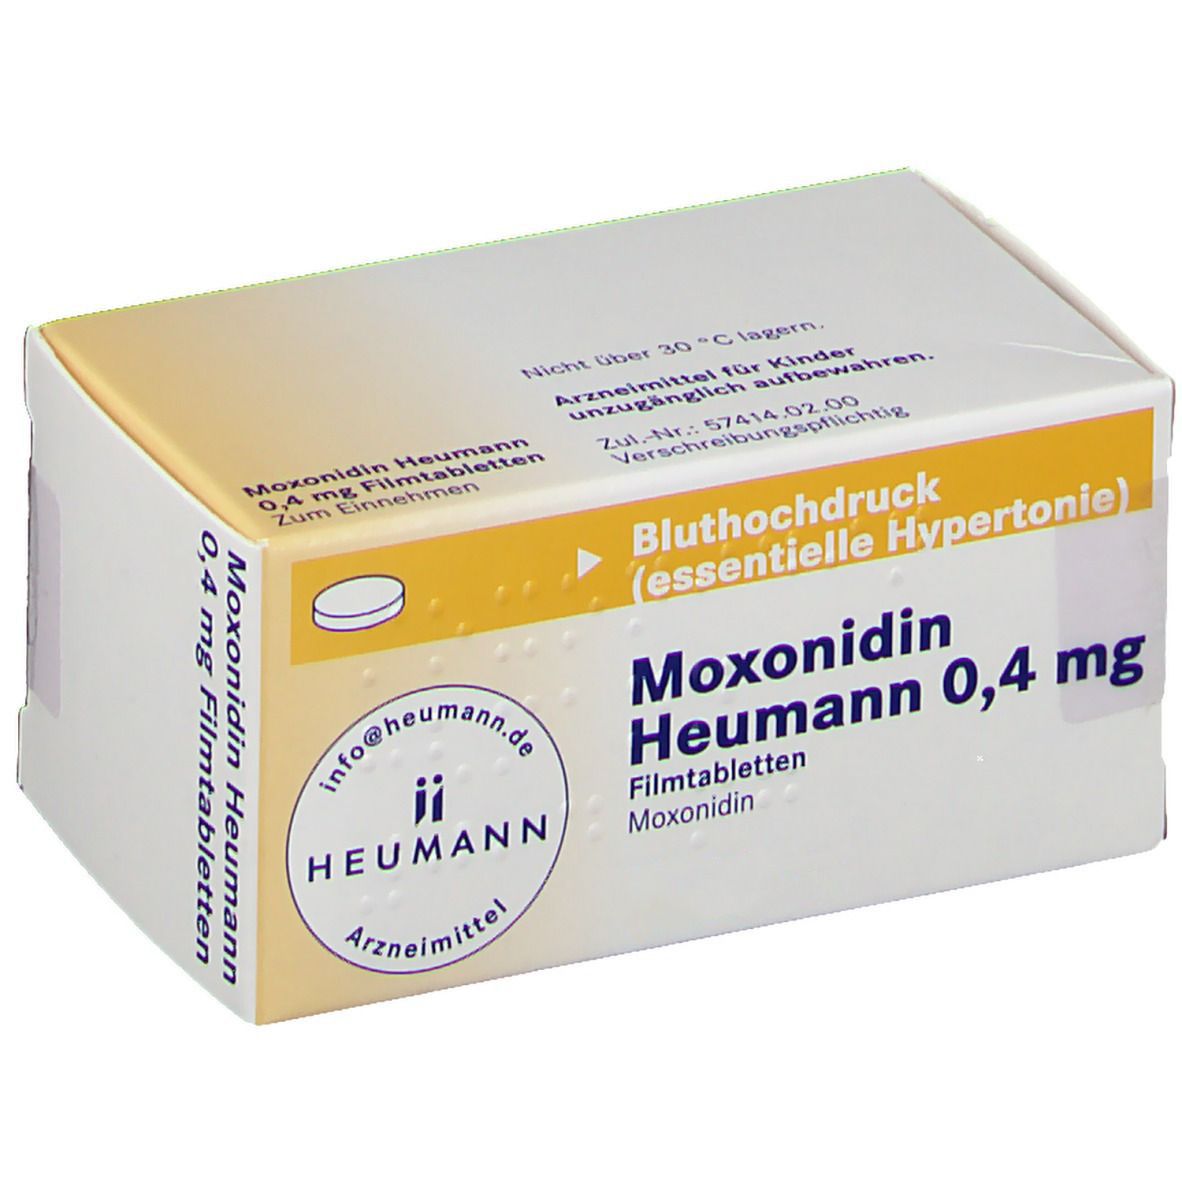 Moxonidin Heumann 0,4 mg